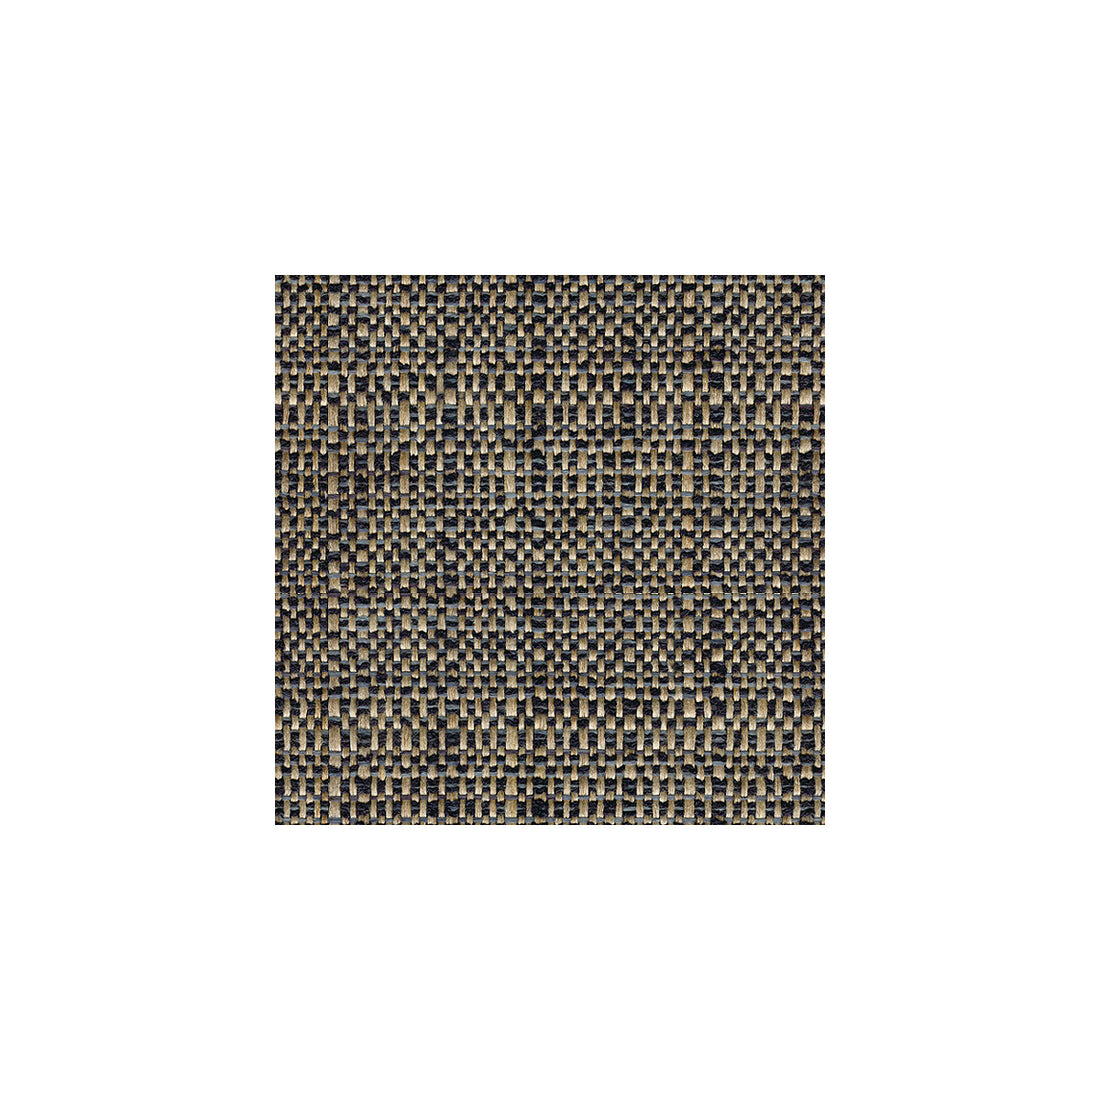 Kf Smt fabric - pattern 31747.50.0 - by Kravet Smart